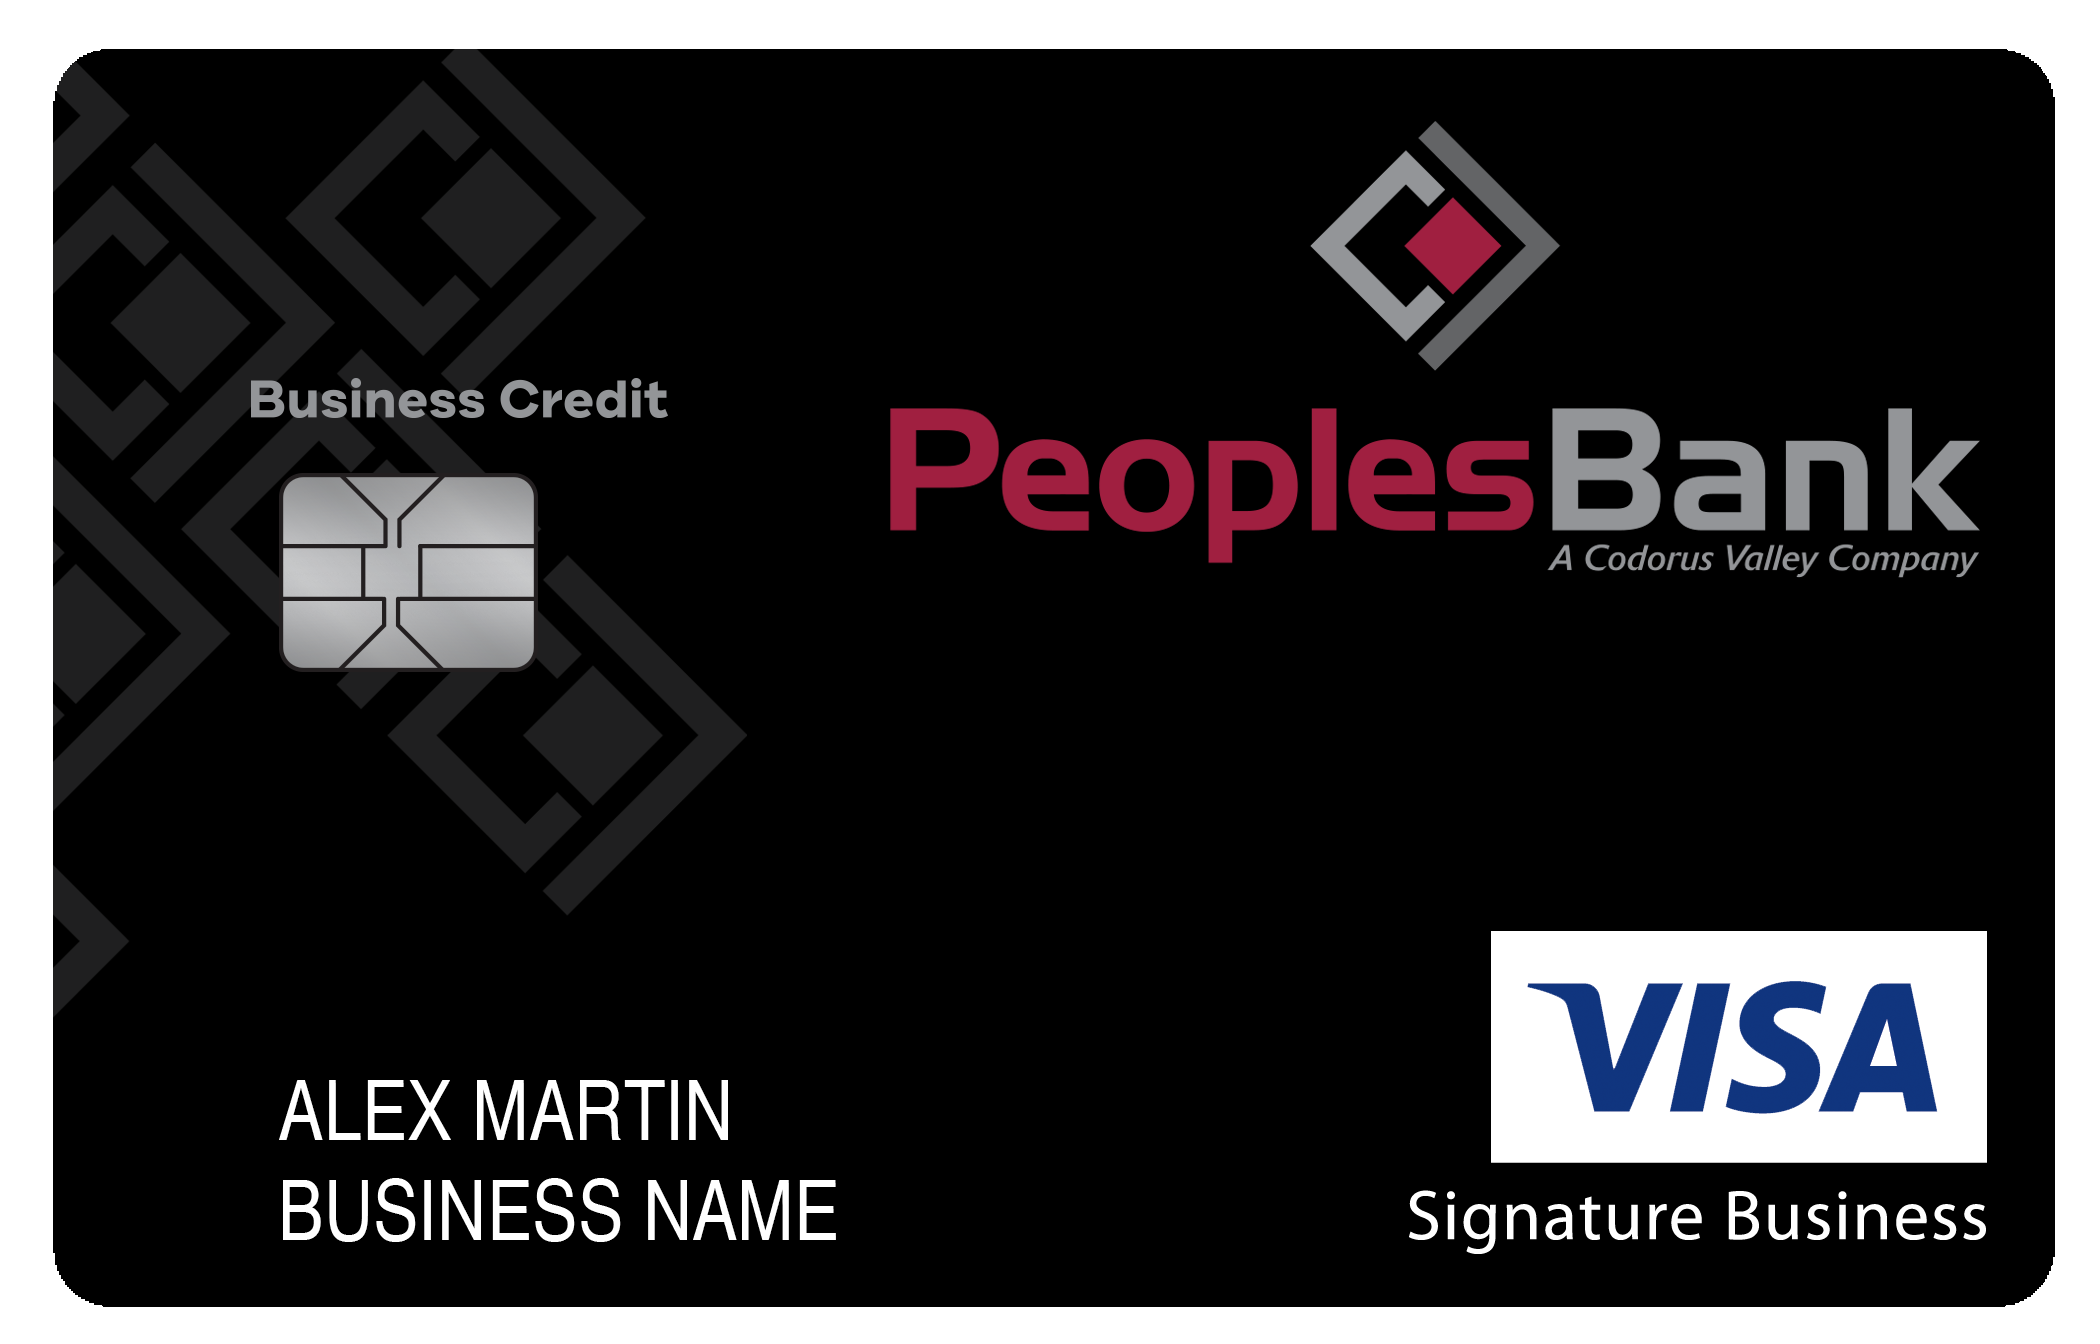 PeoplesBank Smart Business Rewards Card